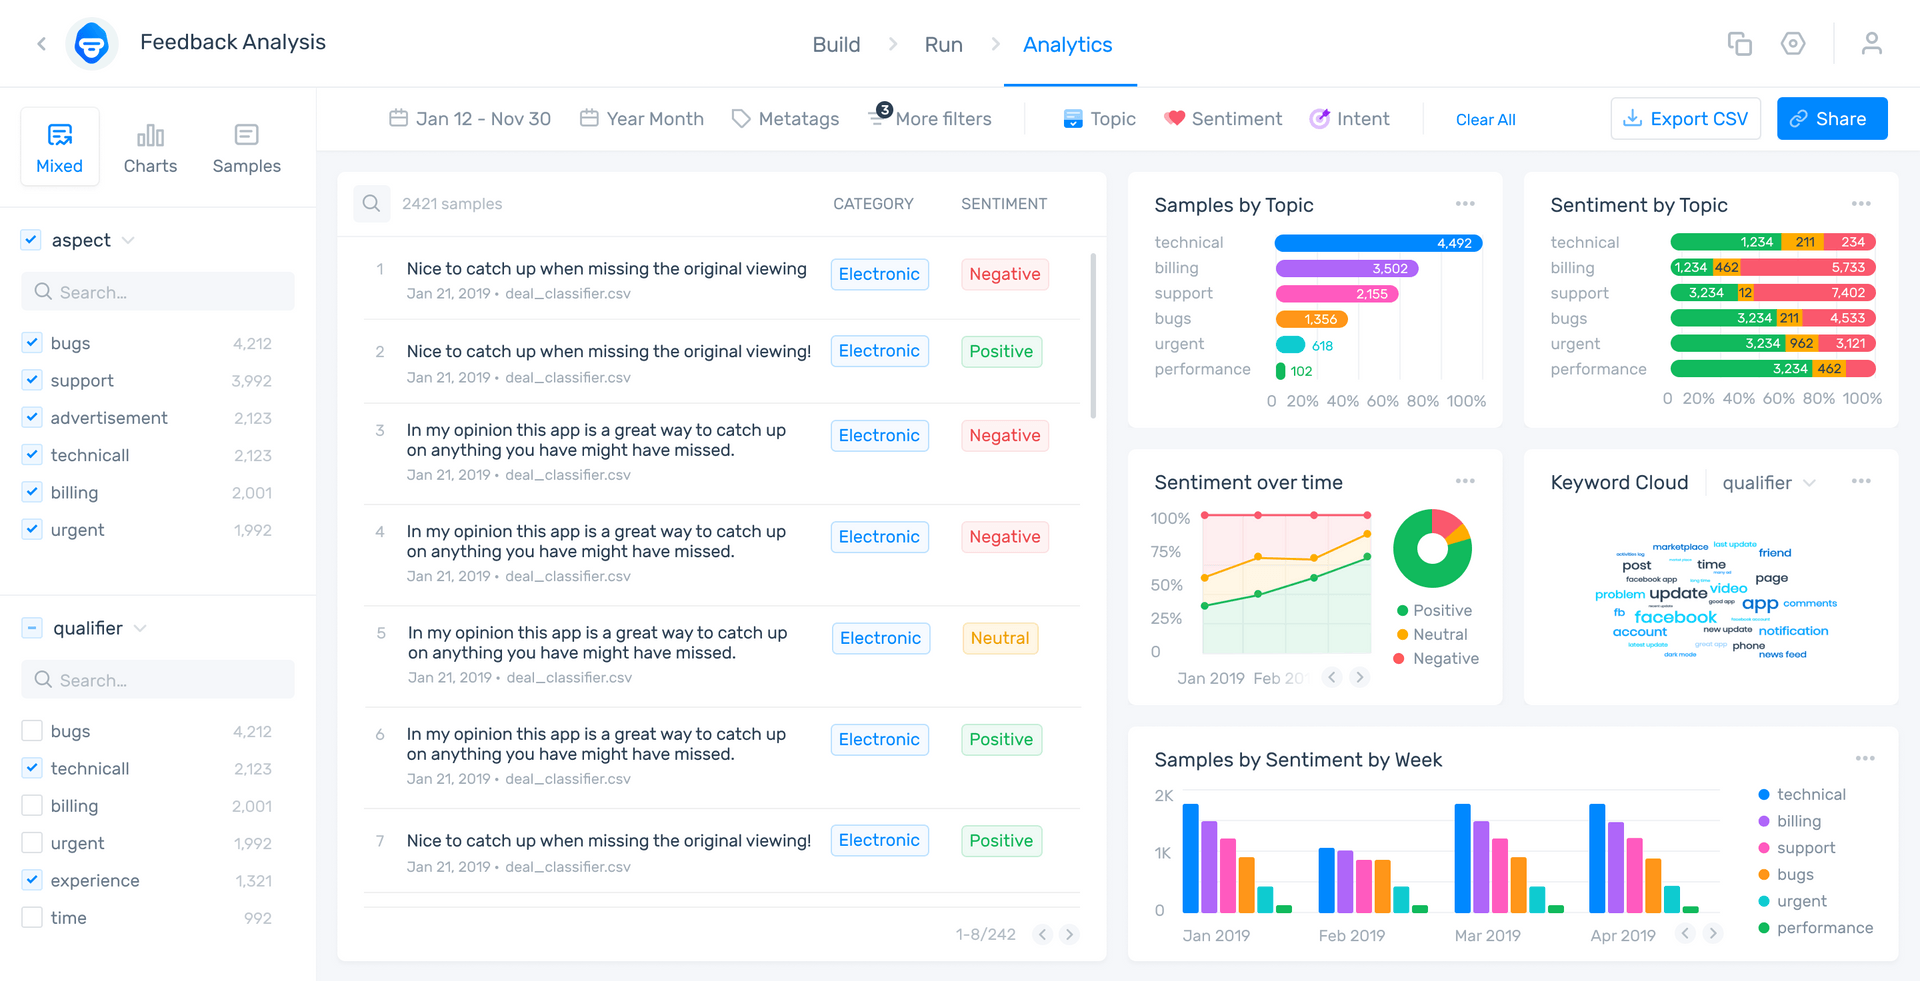 MonkeyLearn Feedback Analysis Demo dashboard featuring statistics and graphs.